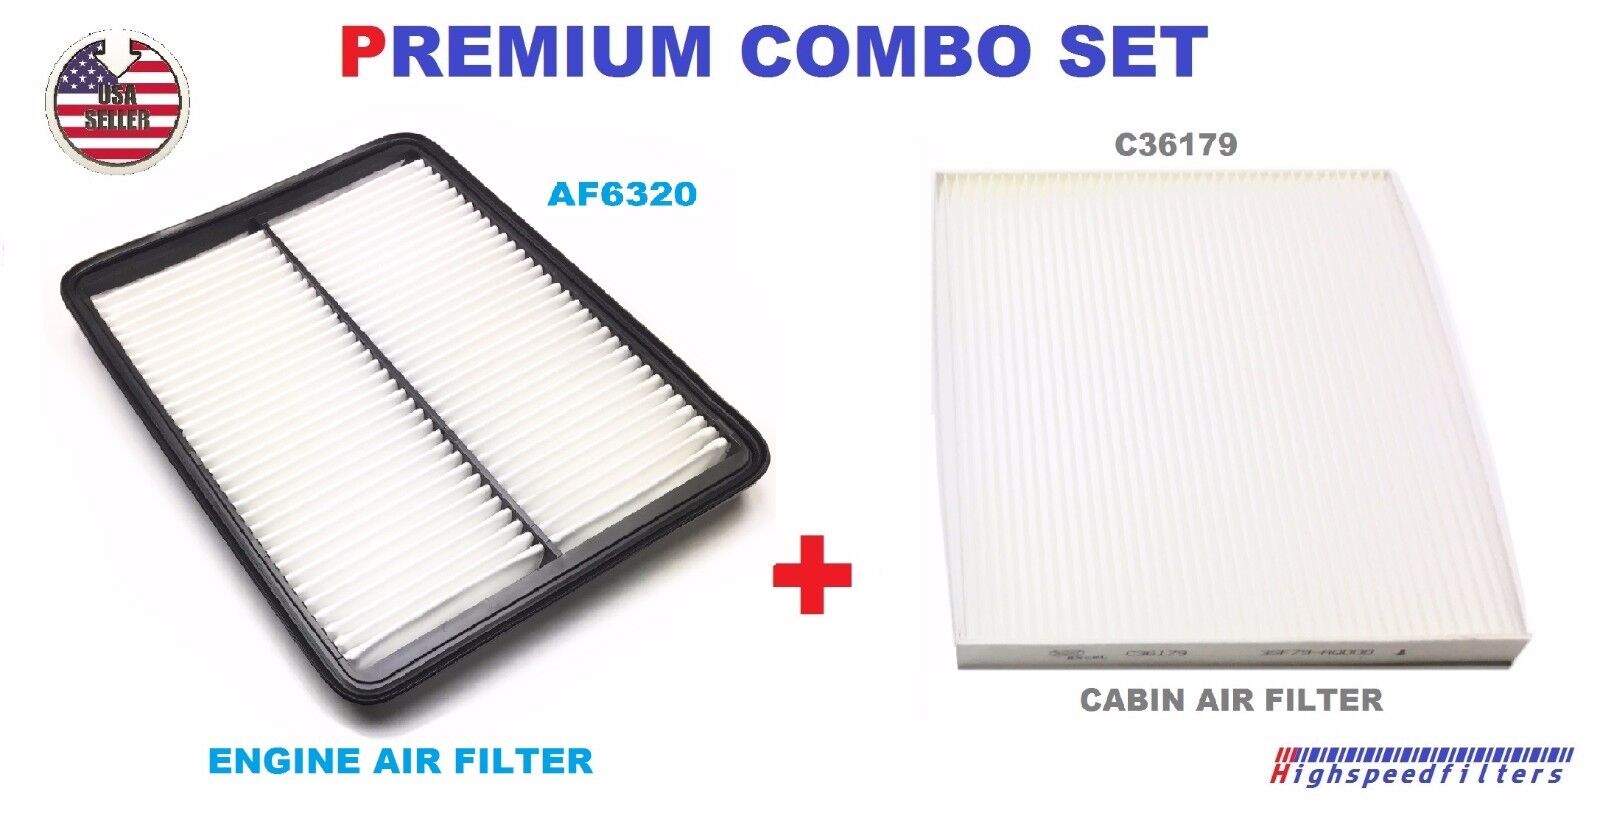 AIR FILTER + CABIN AIR FILTER COMBO FOR 2013 - 18 HYUNDAI SANTA FE AF6320 C36179